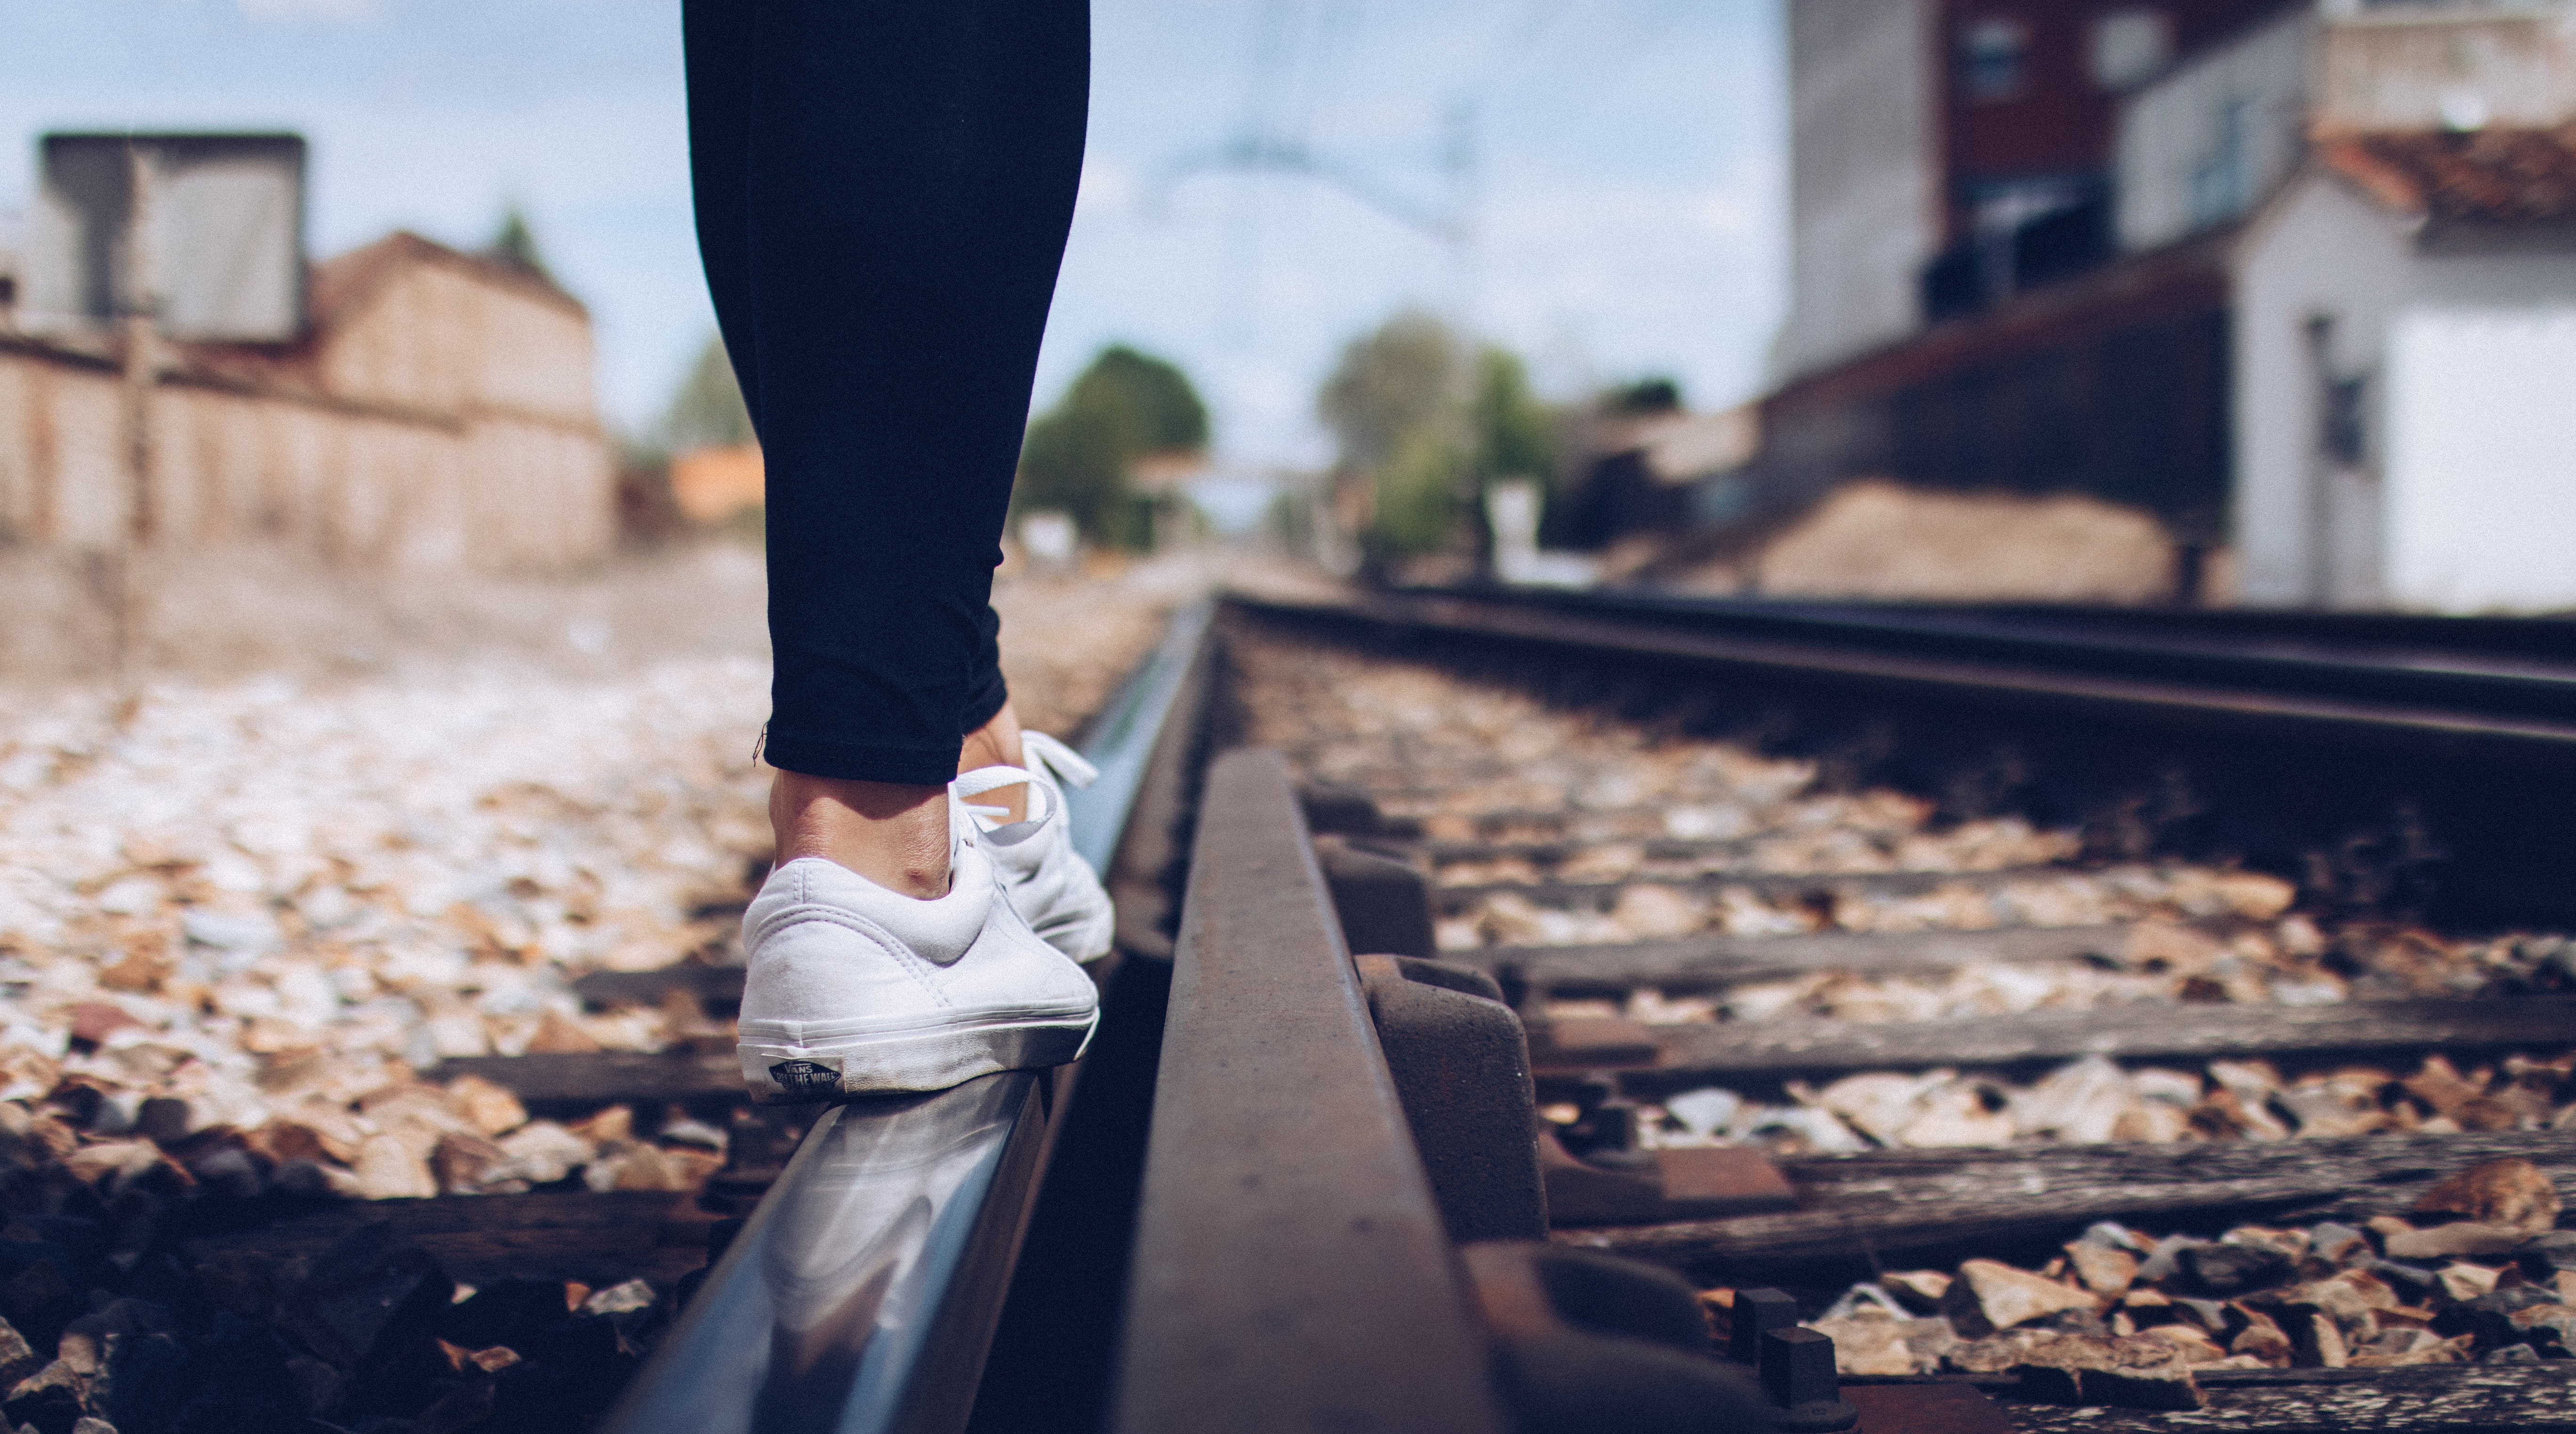 miscellanea, miscellaneous, legs, sneakers, railway